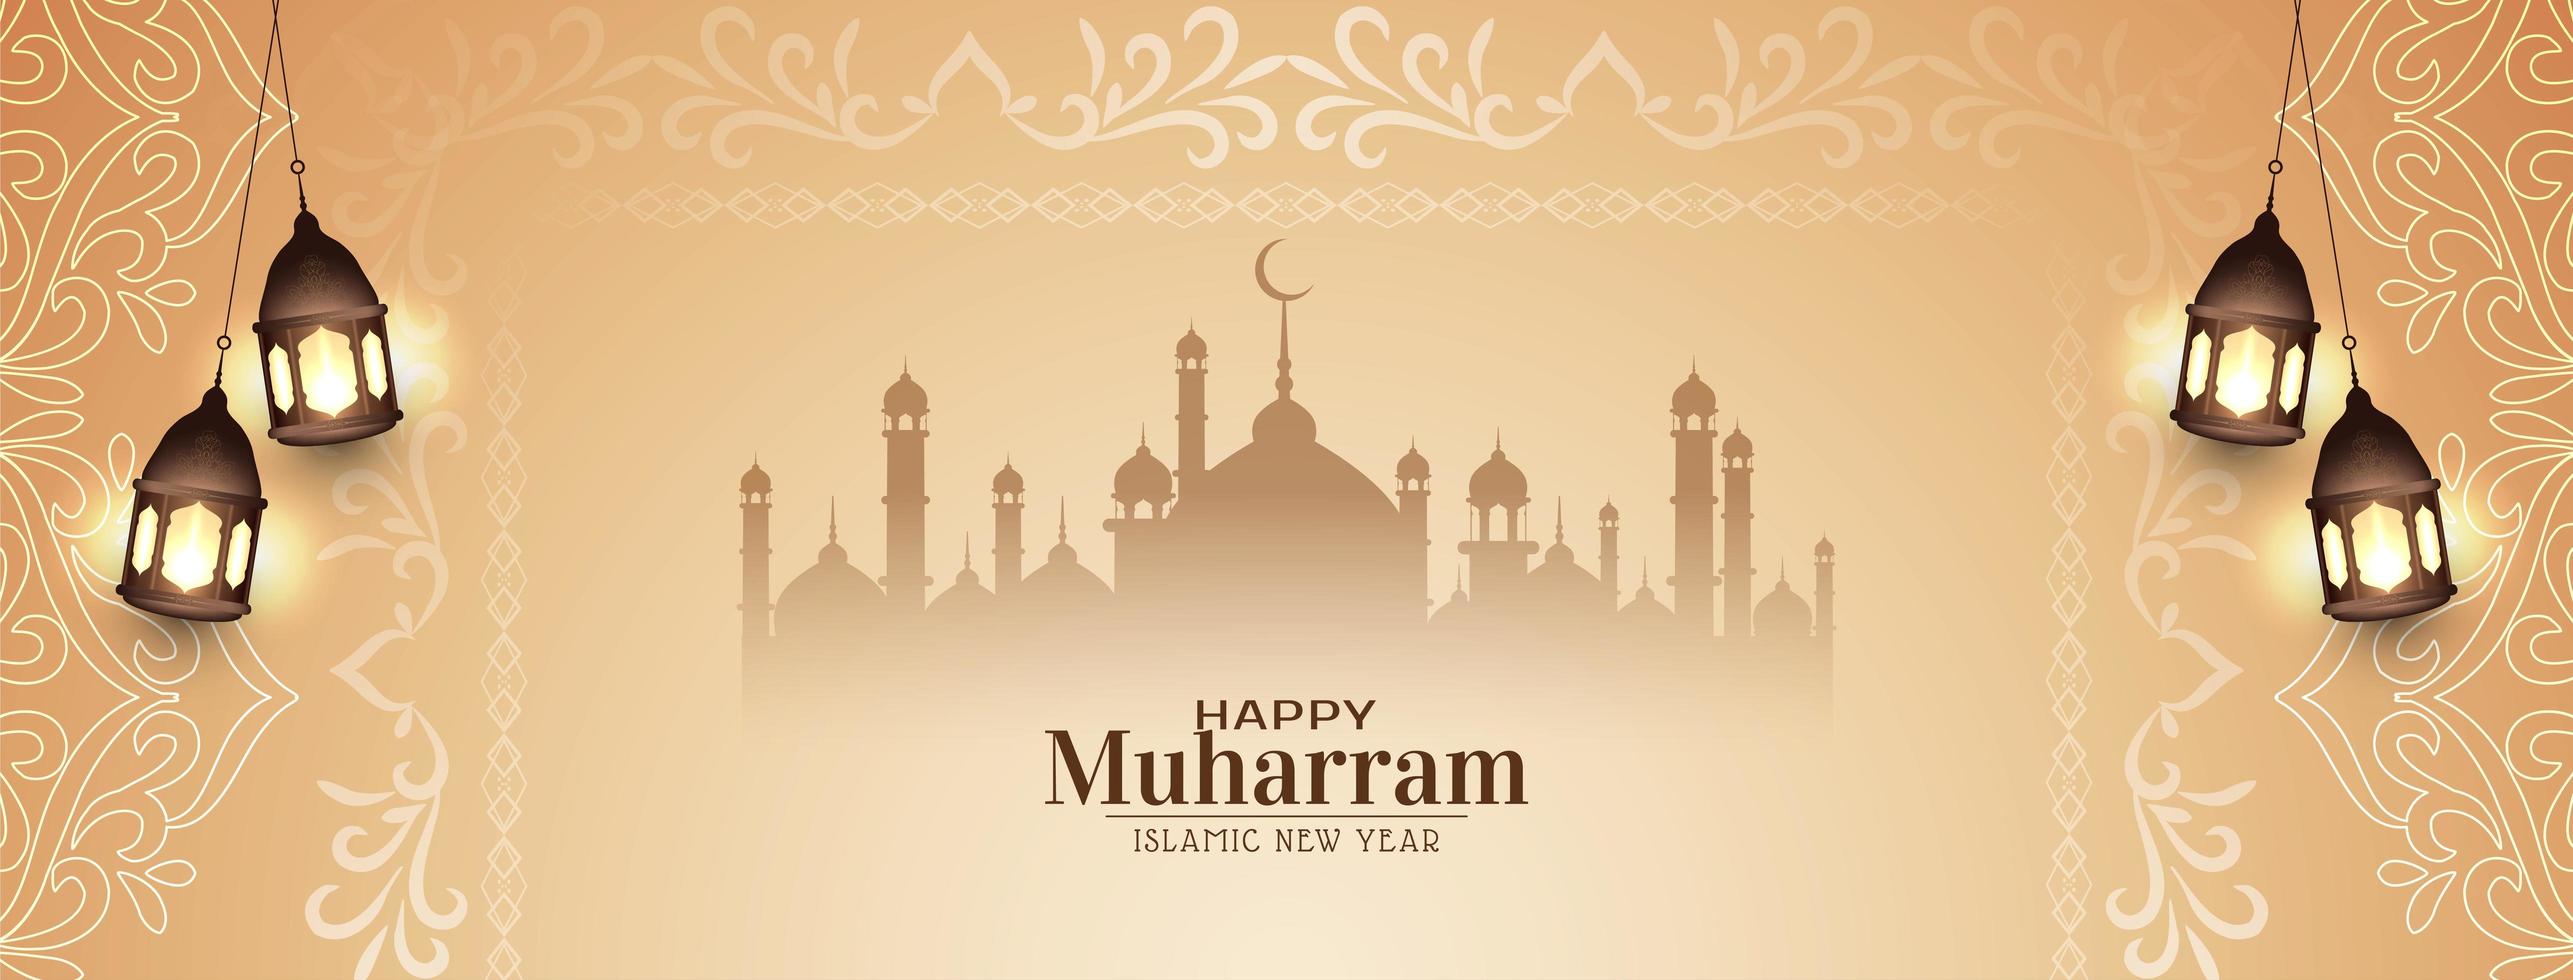 elegant gelukkig muharram festival bannerontwerp vector